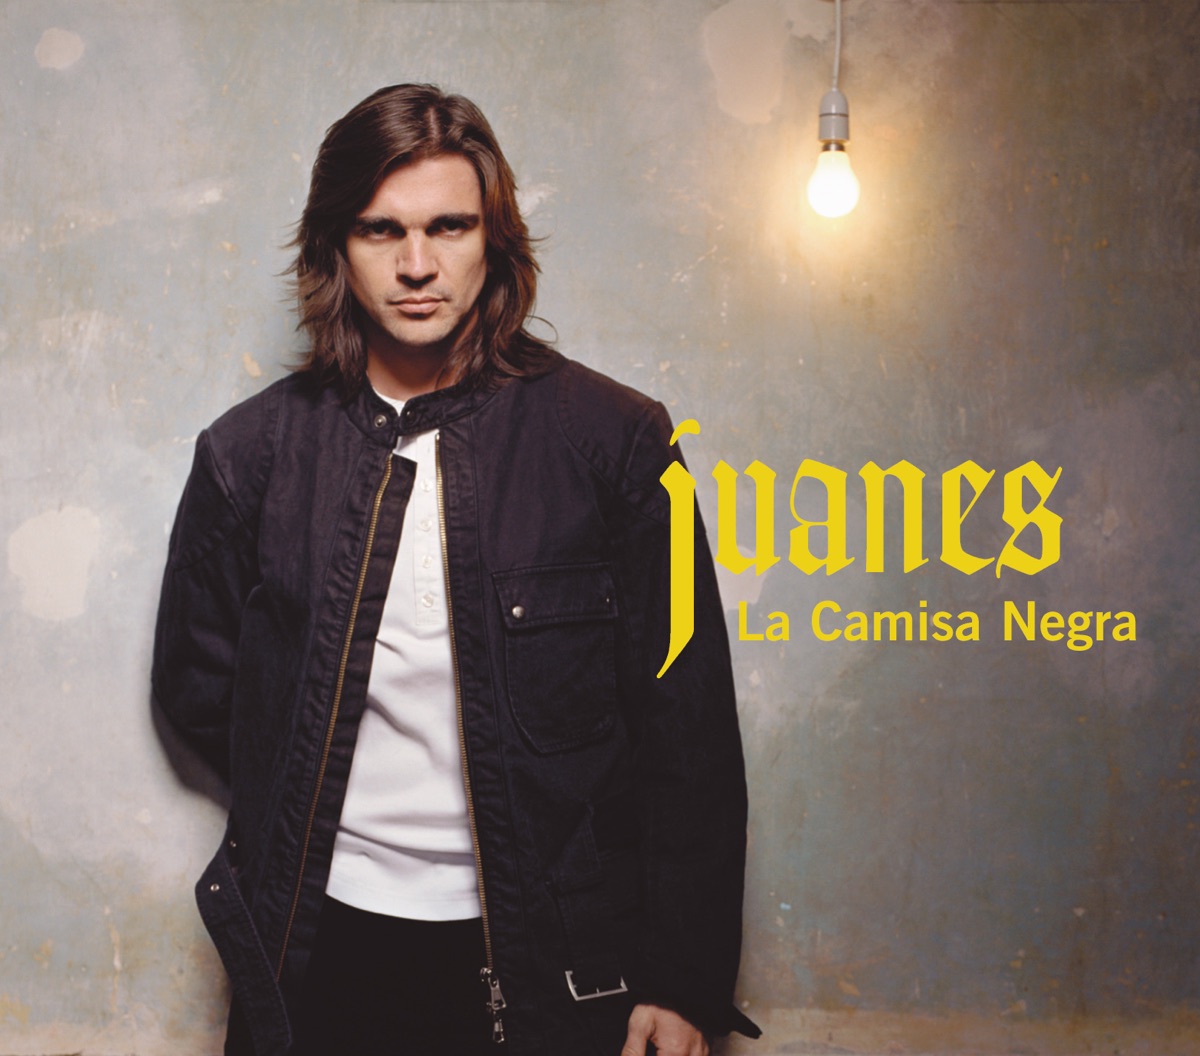 La Camisa Negra - Single - Album by Juanes - Apple Music